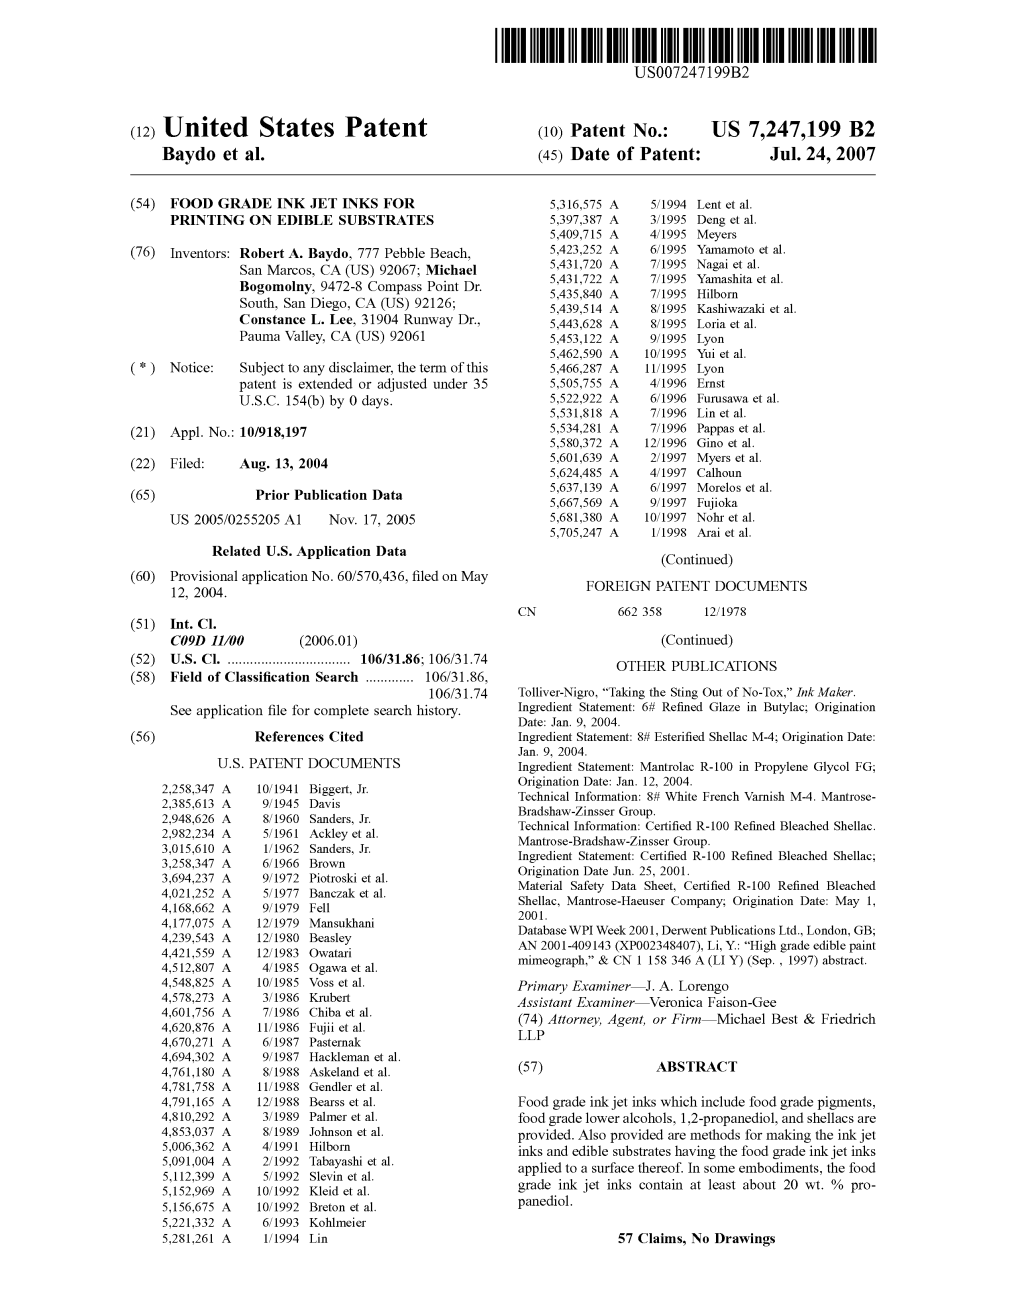 (12) United States Patent (10) Patent No.: US 7,247,199 B2 Bay Do Et Al